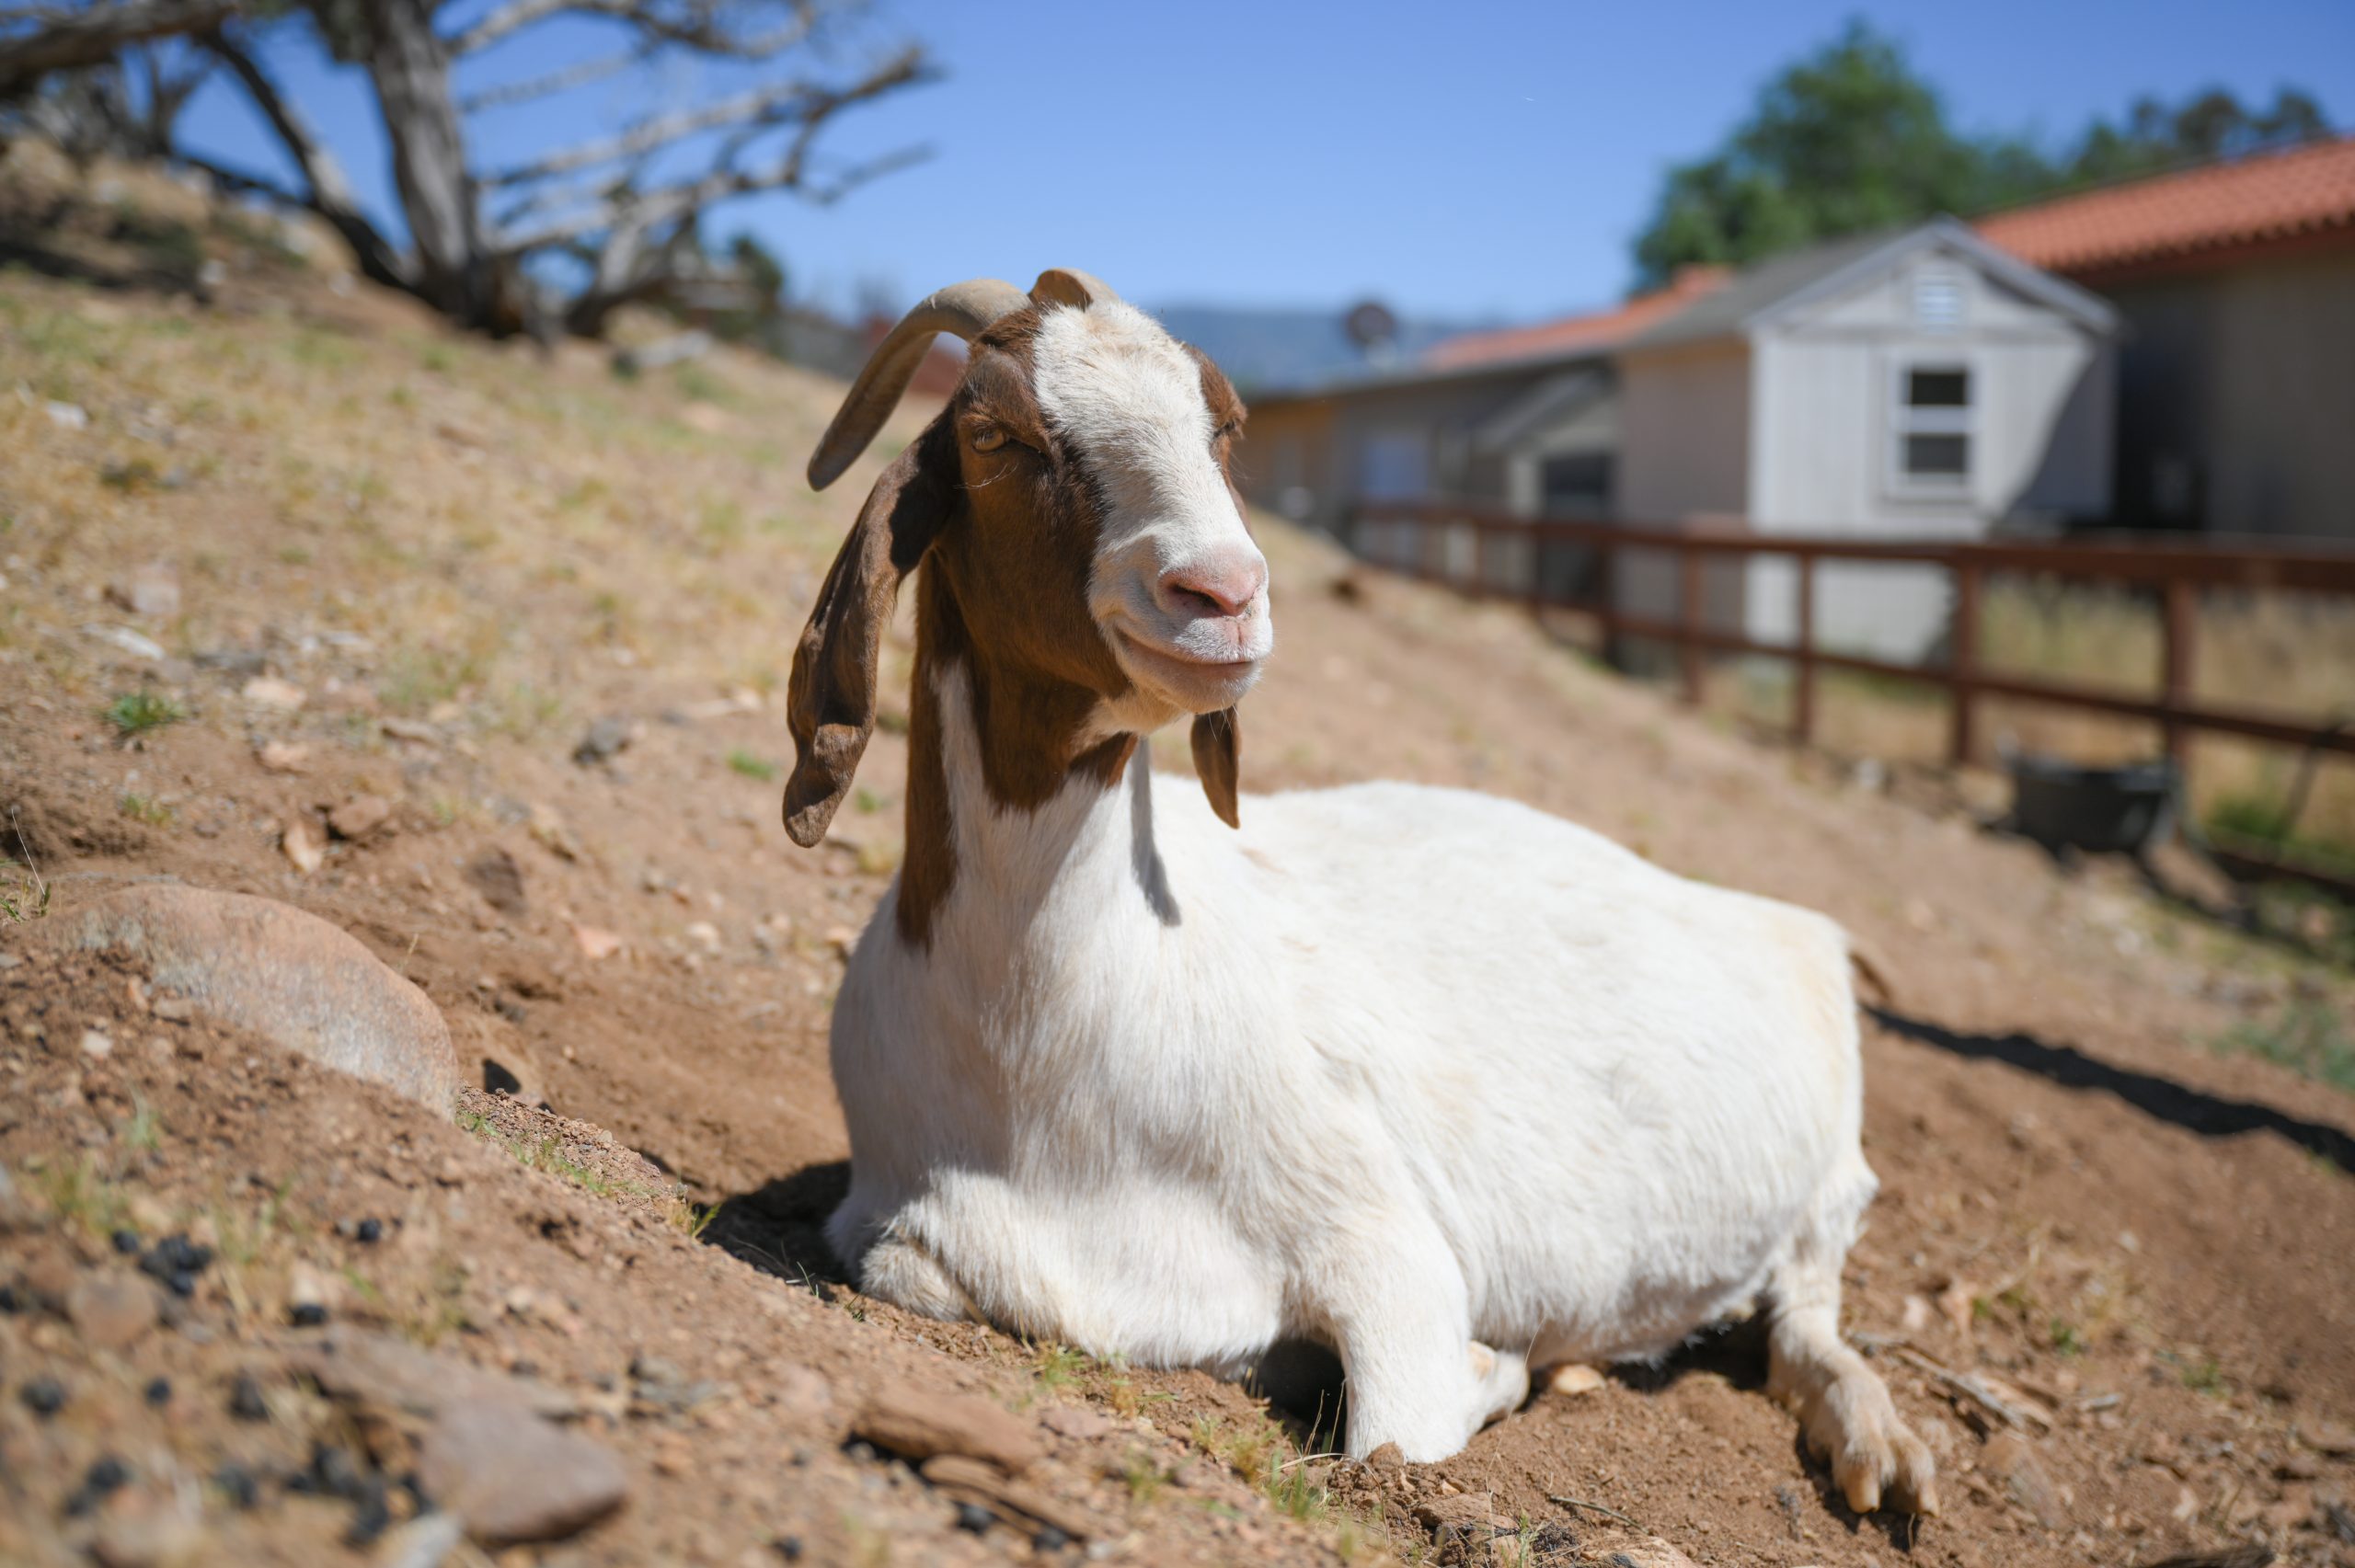 Erika Goat at Farm Sanctuary's Southern California shelter